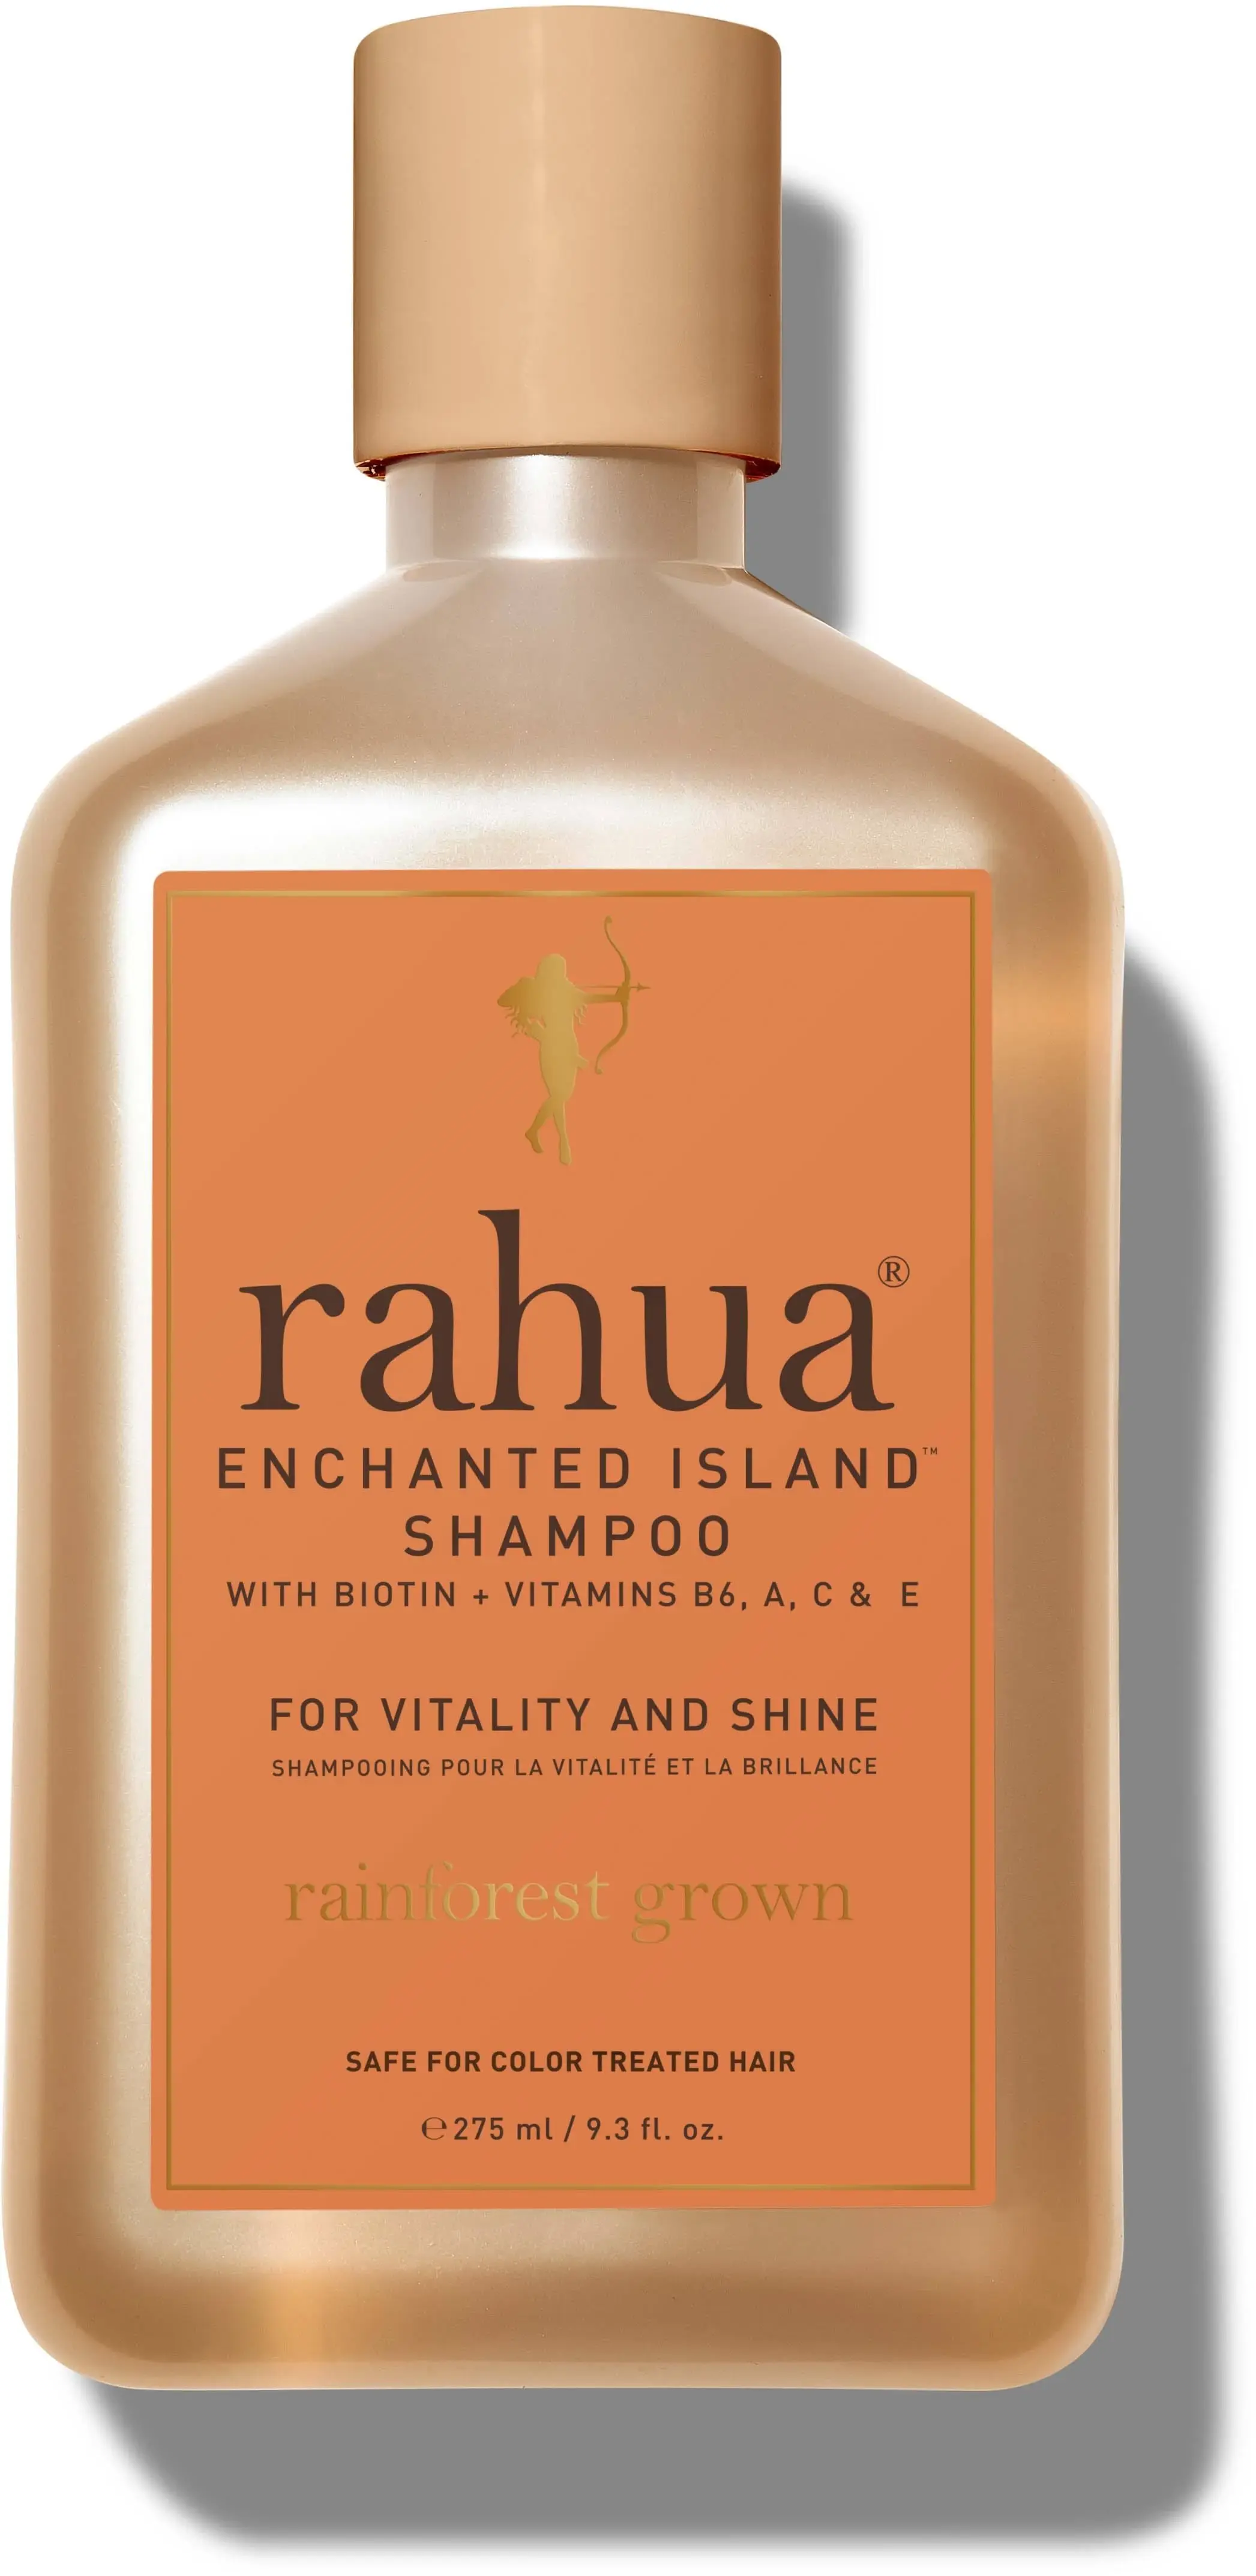 Rahua - Enchanted ISLAND Shampoo 275 ml